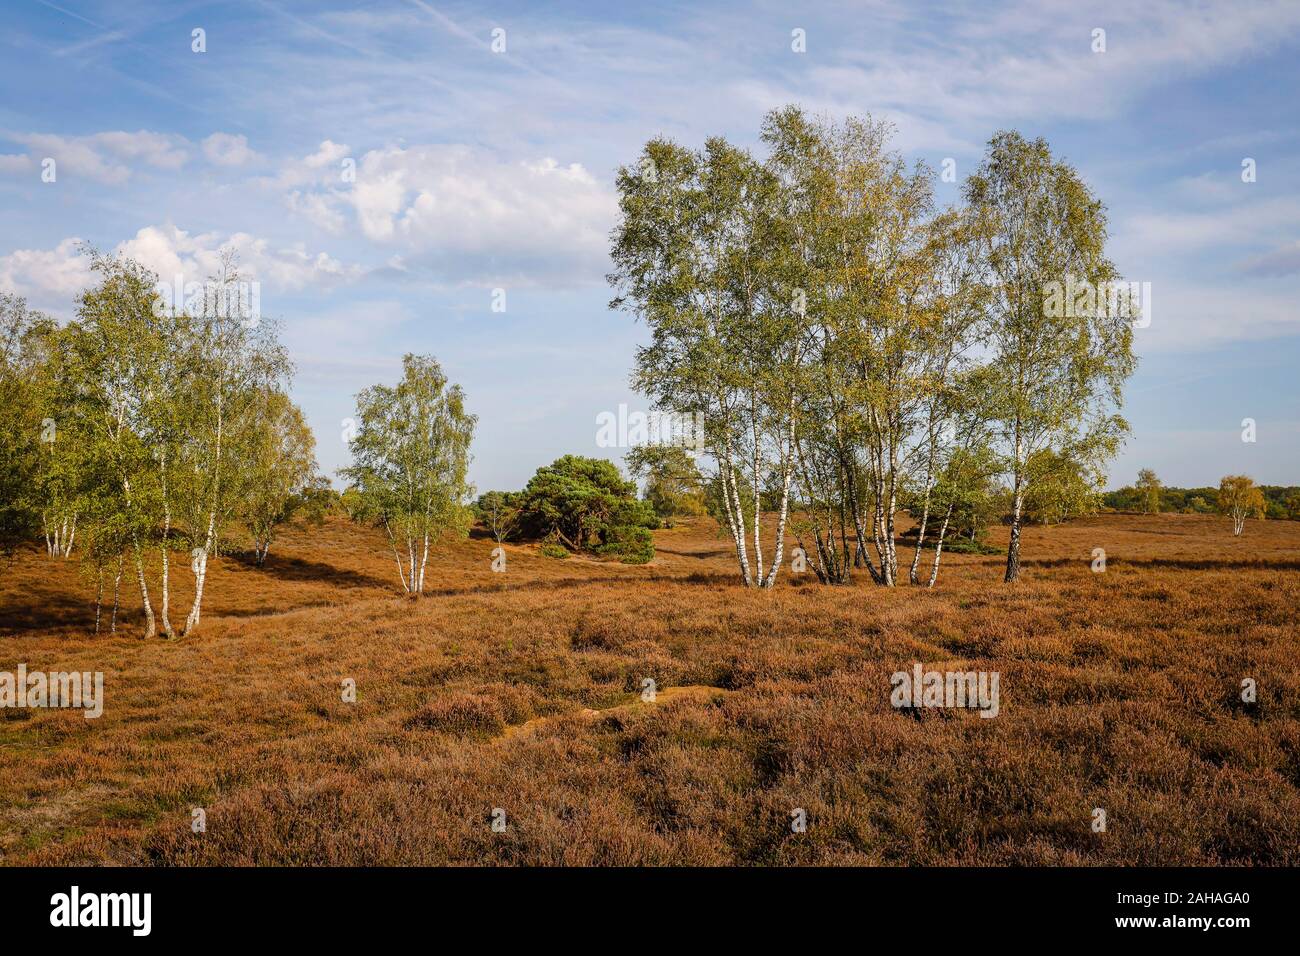 14.10.2019, Haltern am See, Rhénanie du Nord-Westphalie, Allemagne - Westruper Heide, la plus grande zone d'arbustes nains heath en Westphalie. 00X191014D018CAROEX.J Banque D'Images